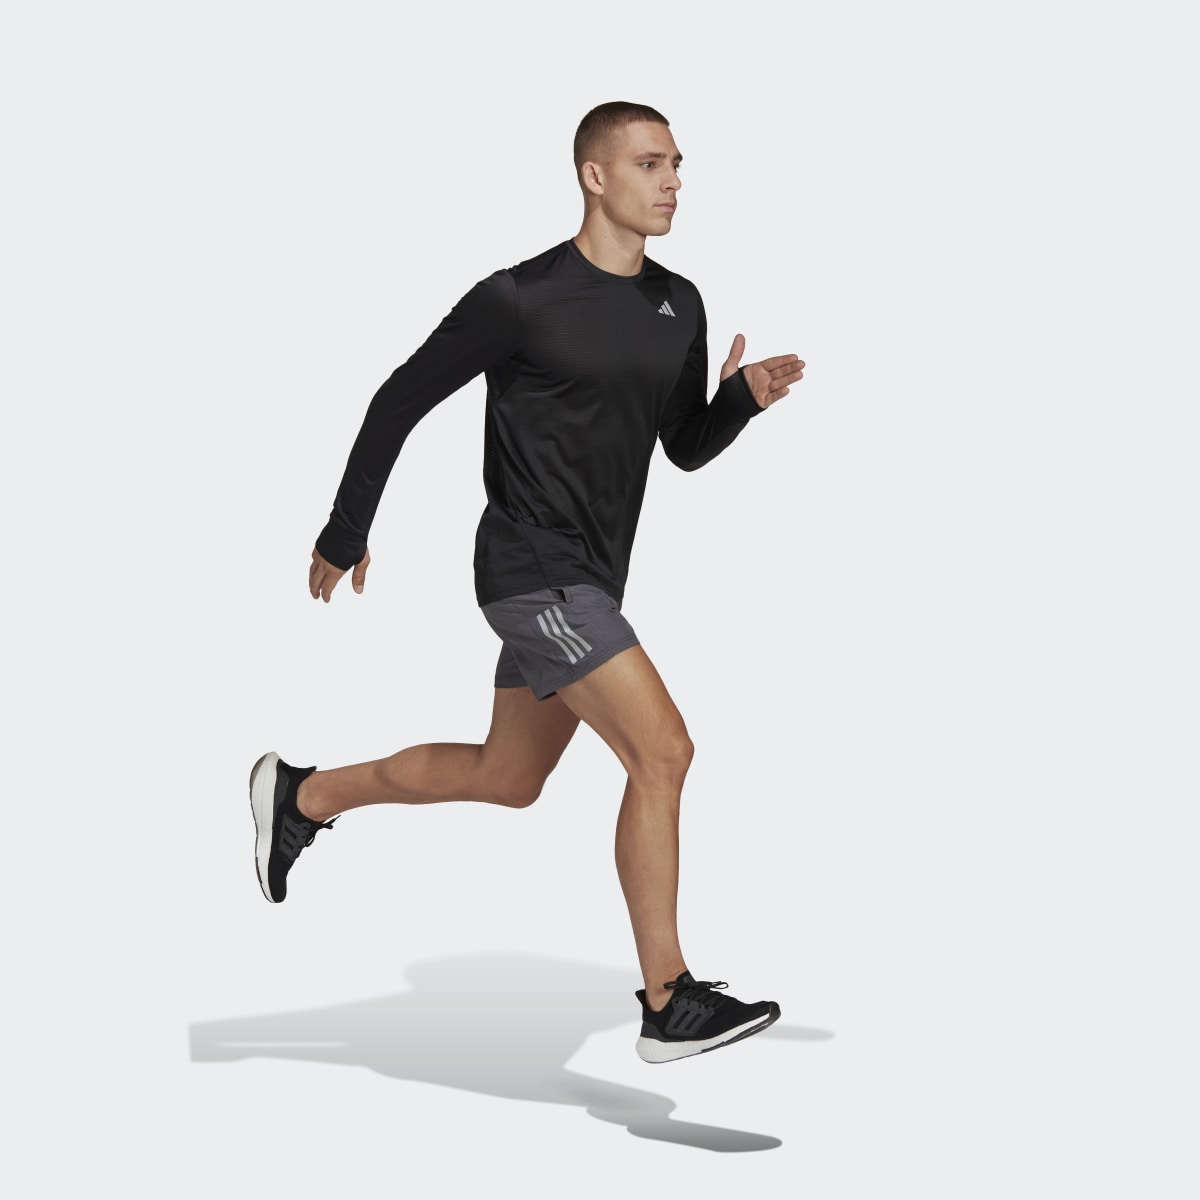 Adidas Own the Run Long-Sleeve Top. 4